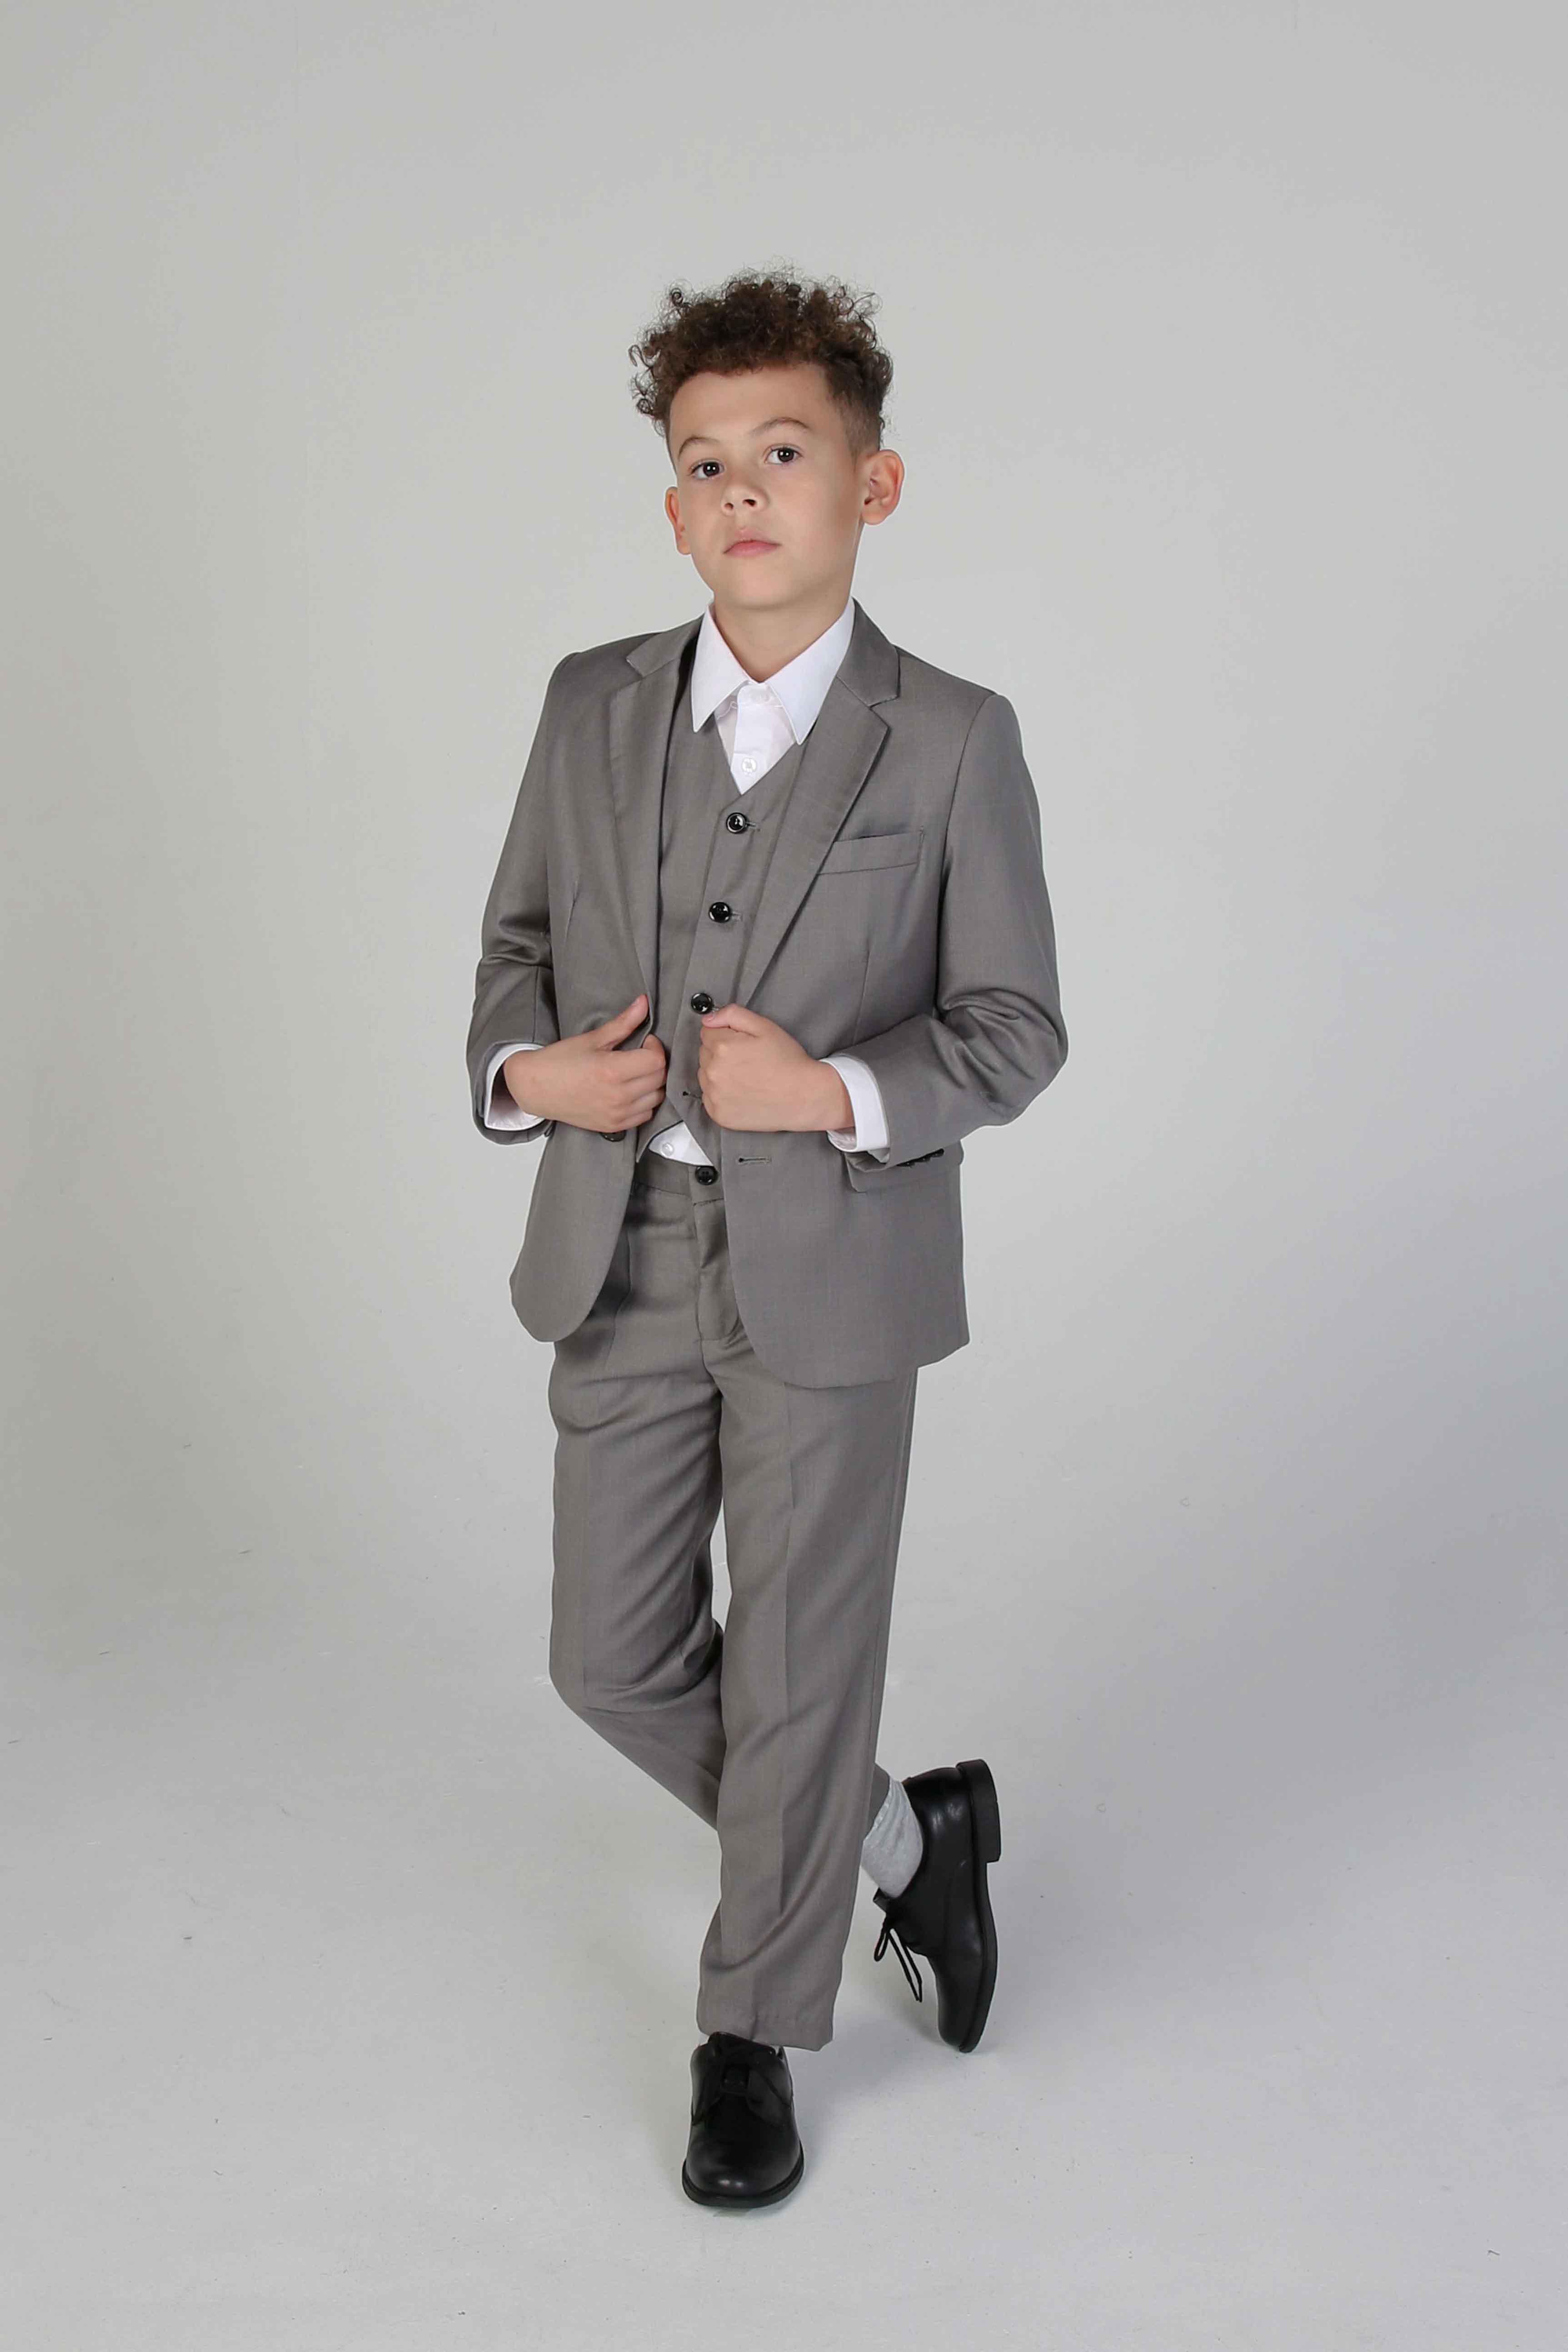 Paul Andrew Children - Device - Boy's Charles Grey Three Piece Suit